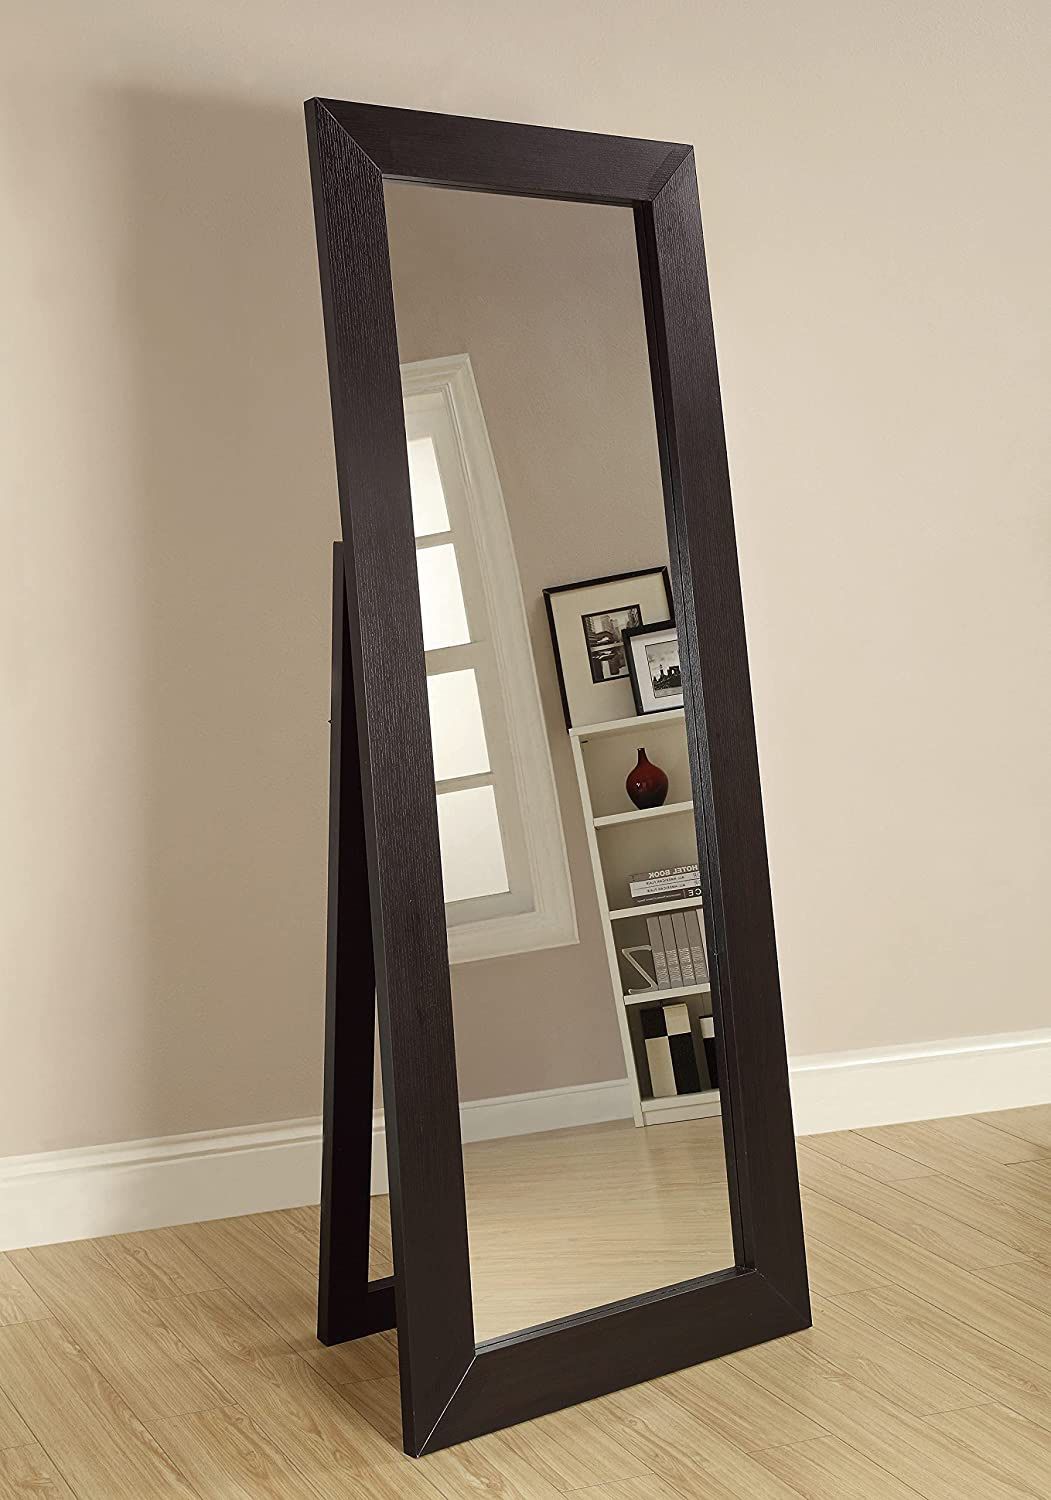 72” Coaster Furniture Full Body Floor Cheval Mirror (New in box)